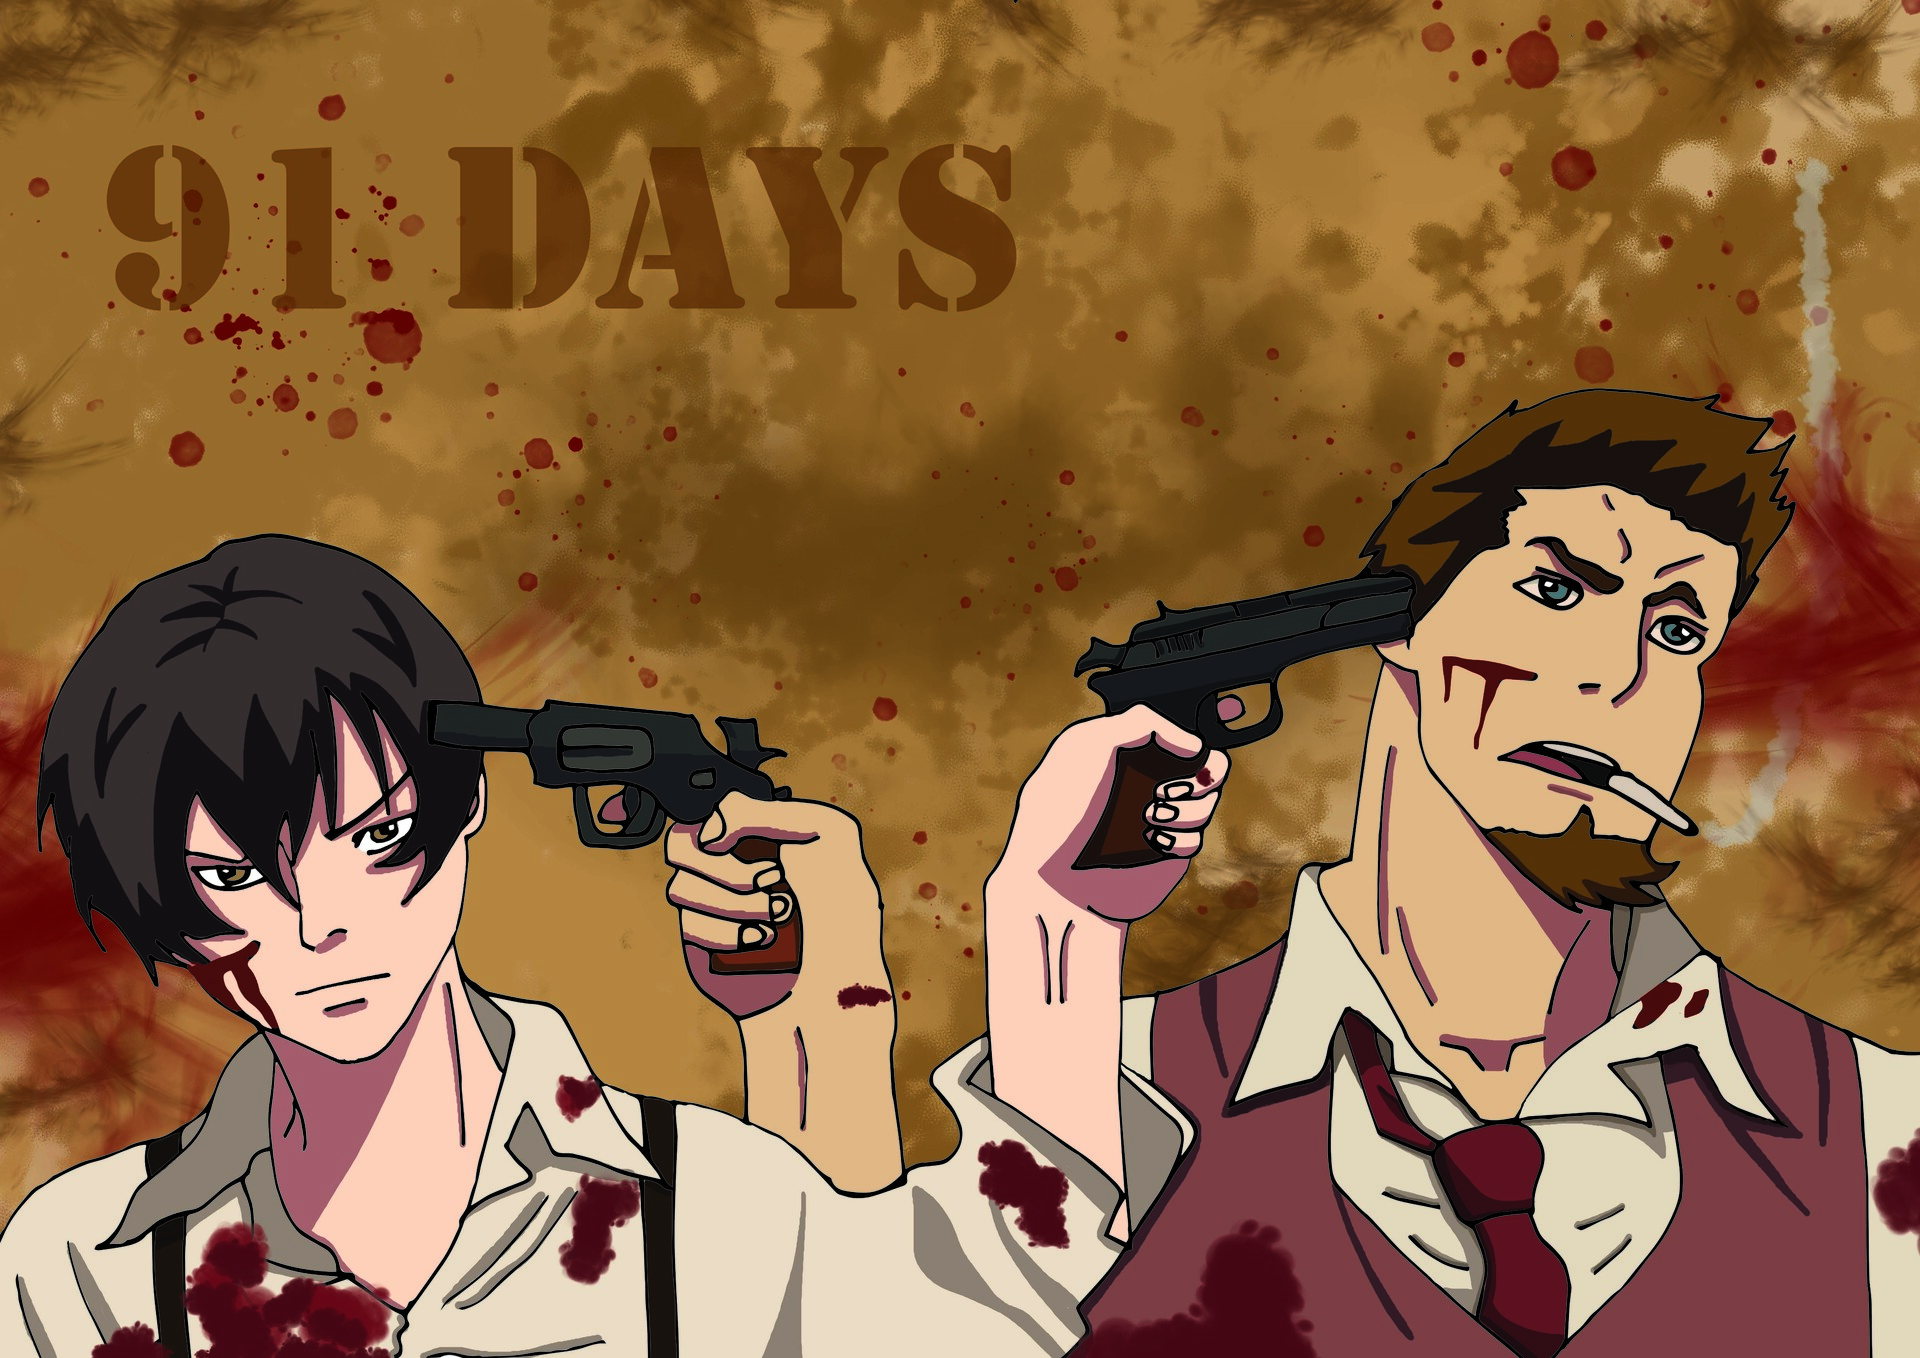 91 days poster  Anime fanart, 91 days, 91 days anime wallpaper